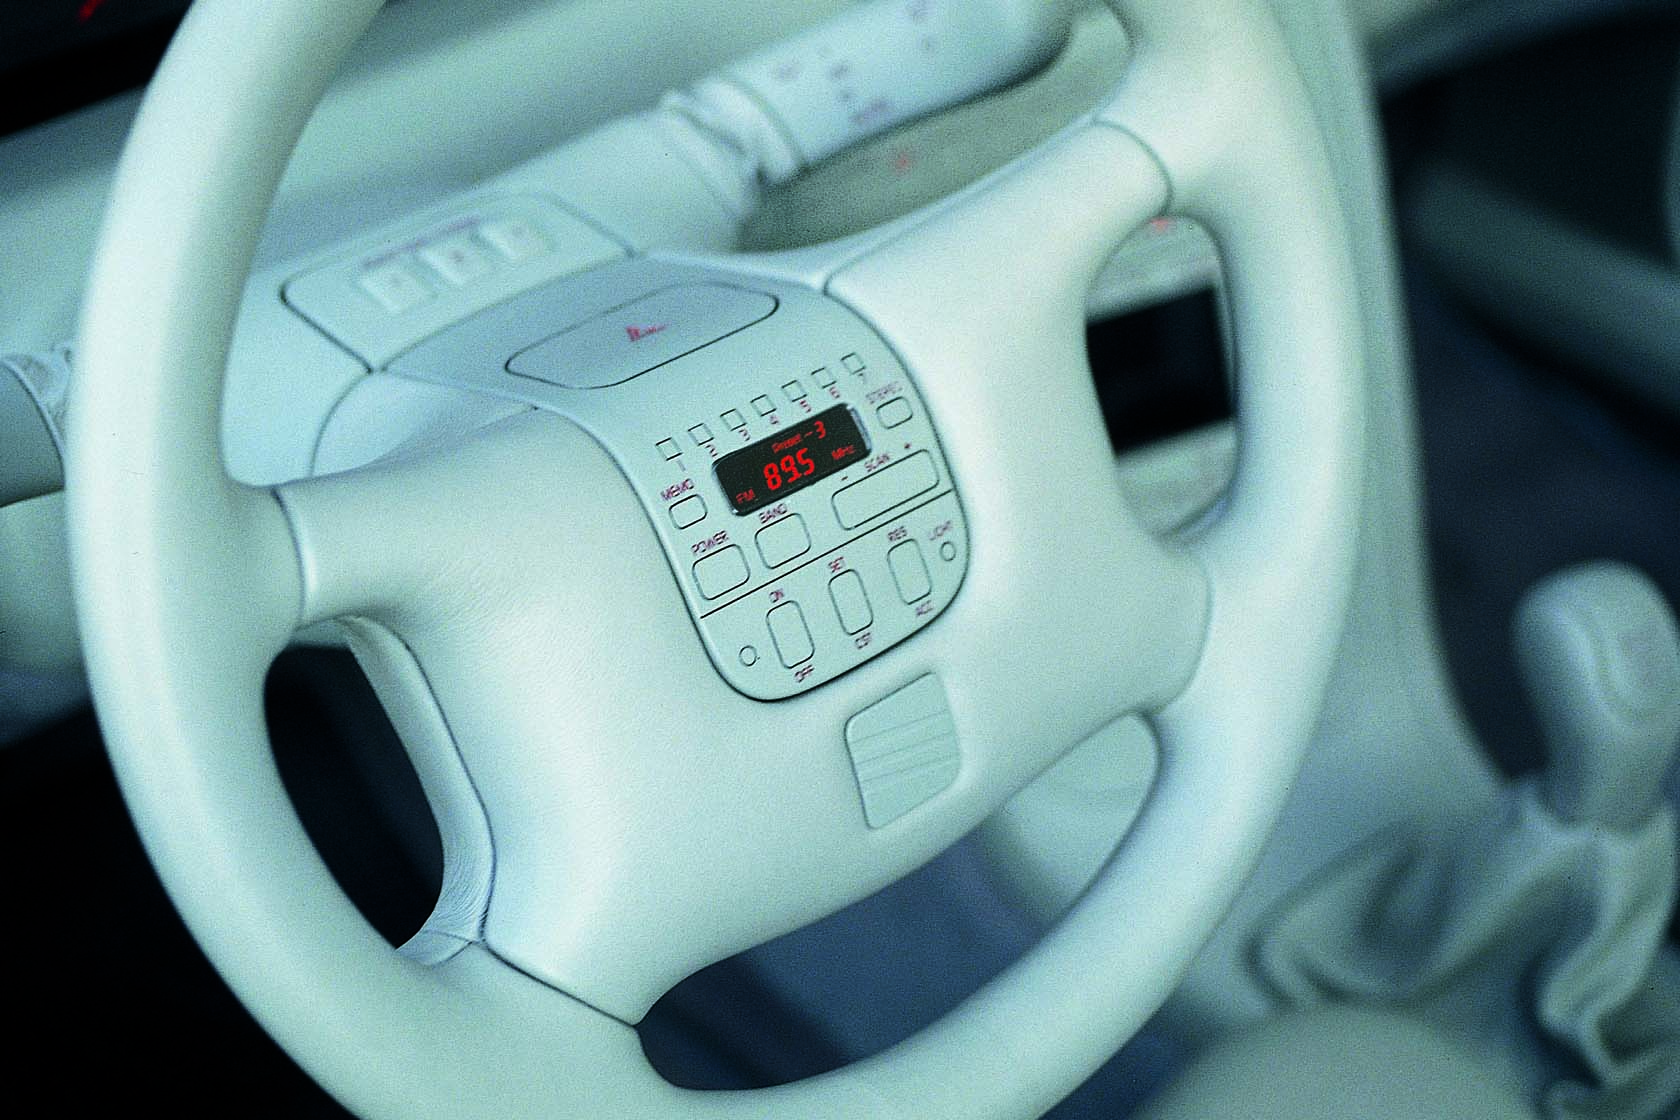 Seat Proto TL (ItalDesign), 1990 - Interior